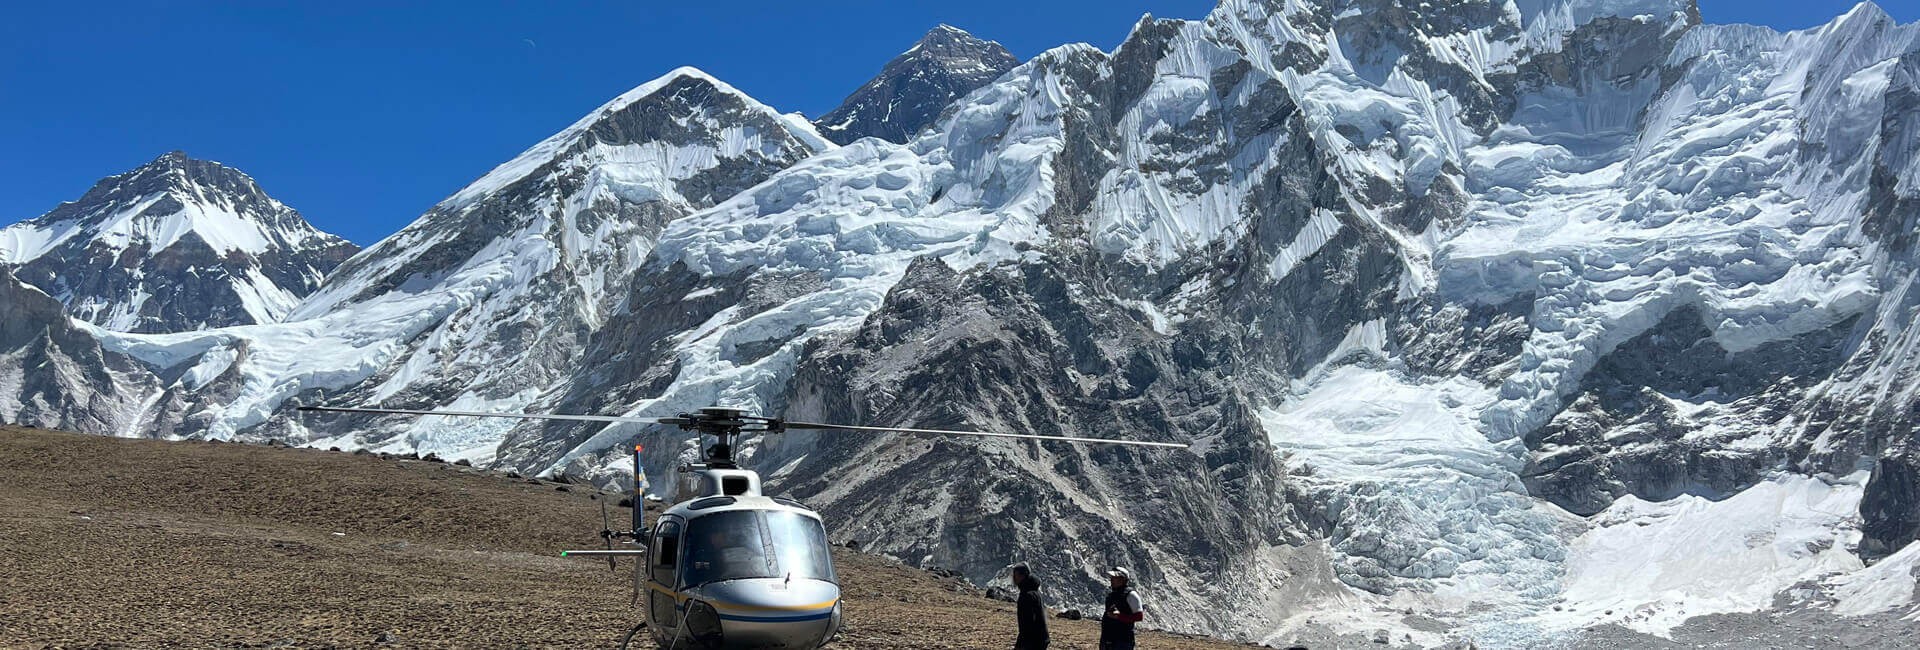 Nepal Based Heli Tour Operator